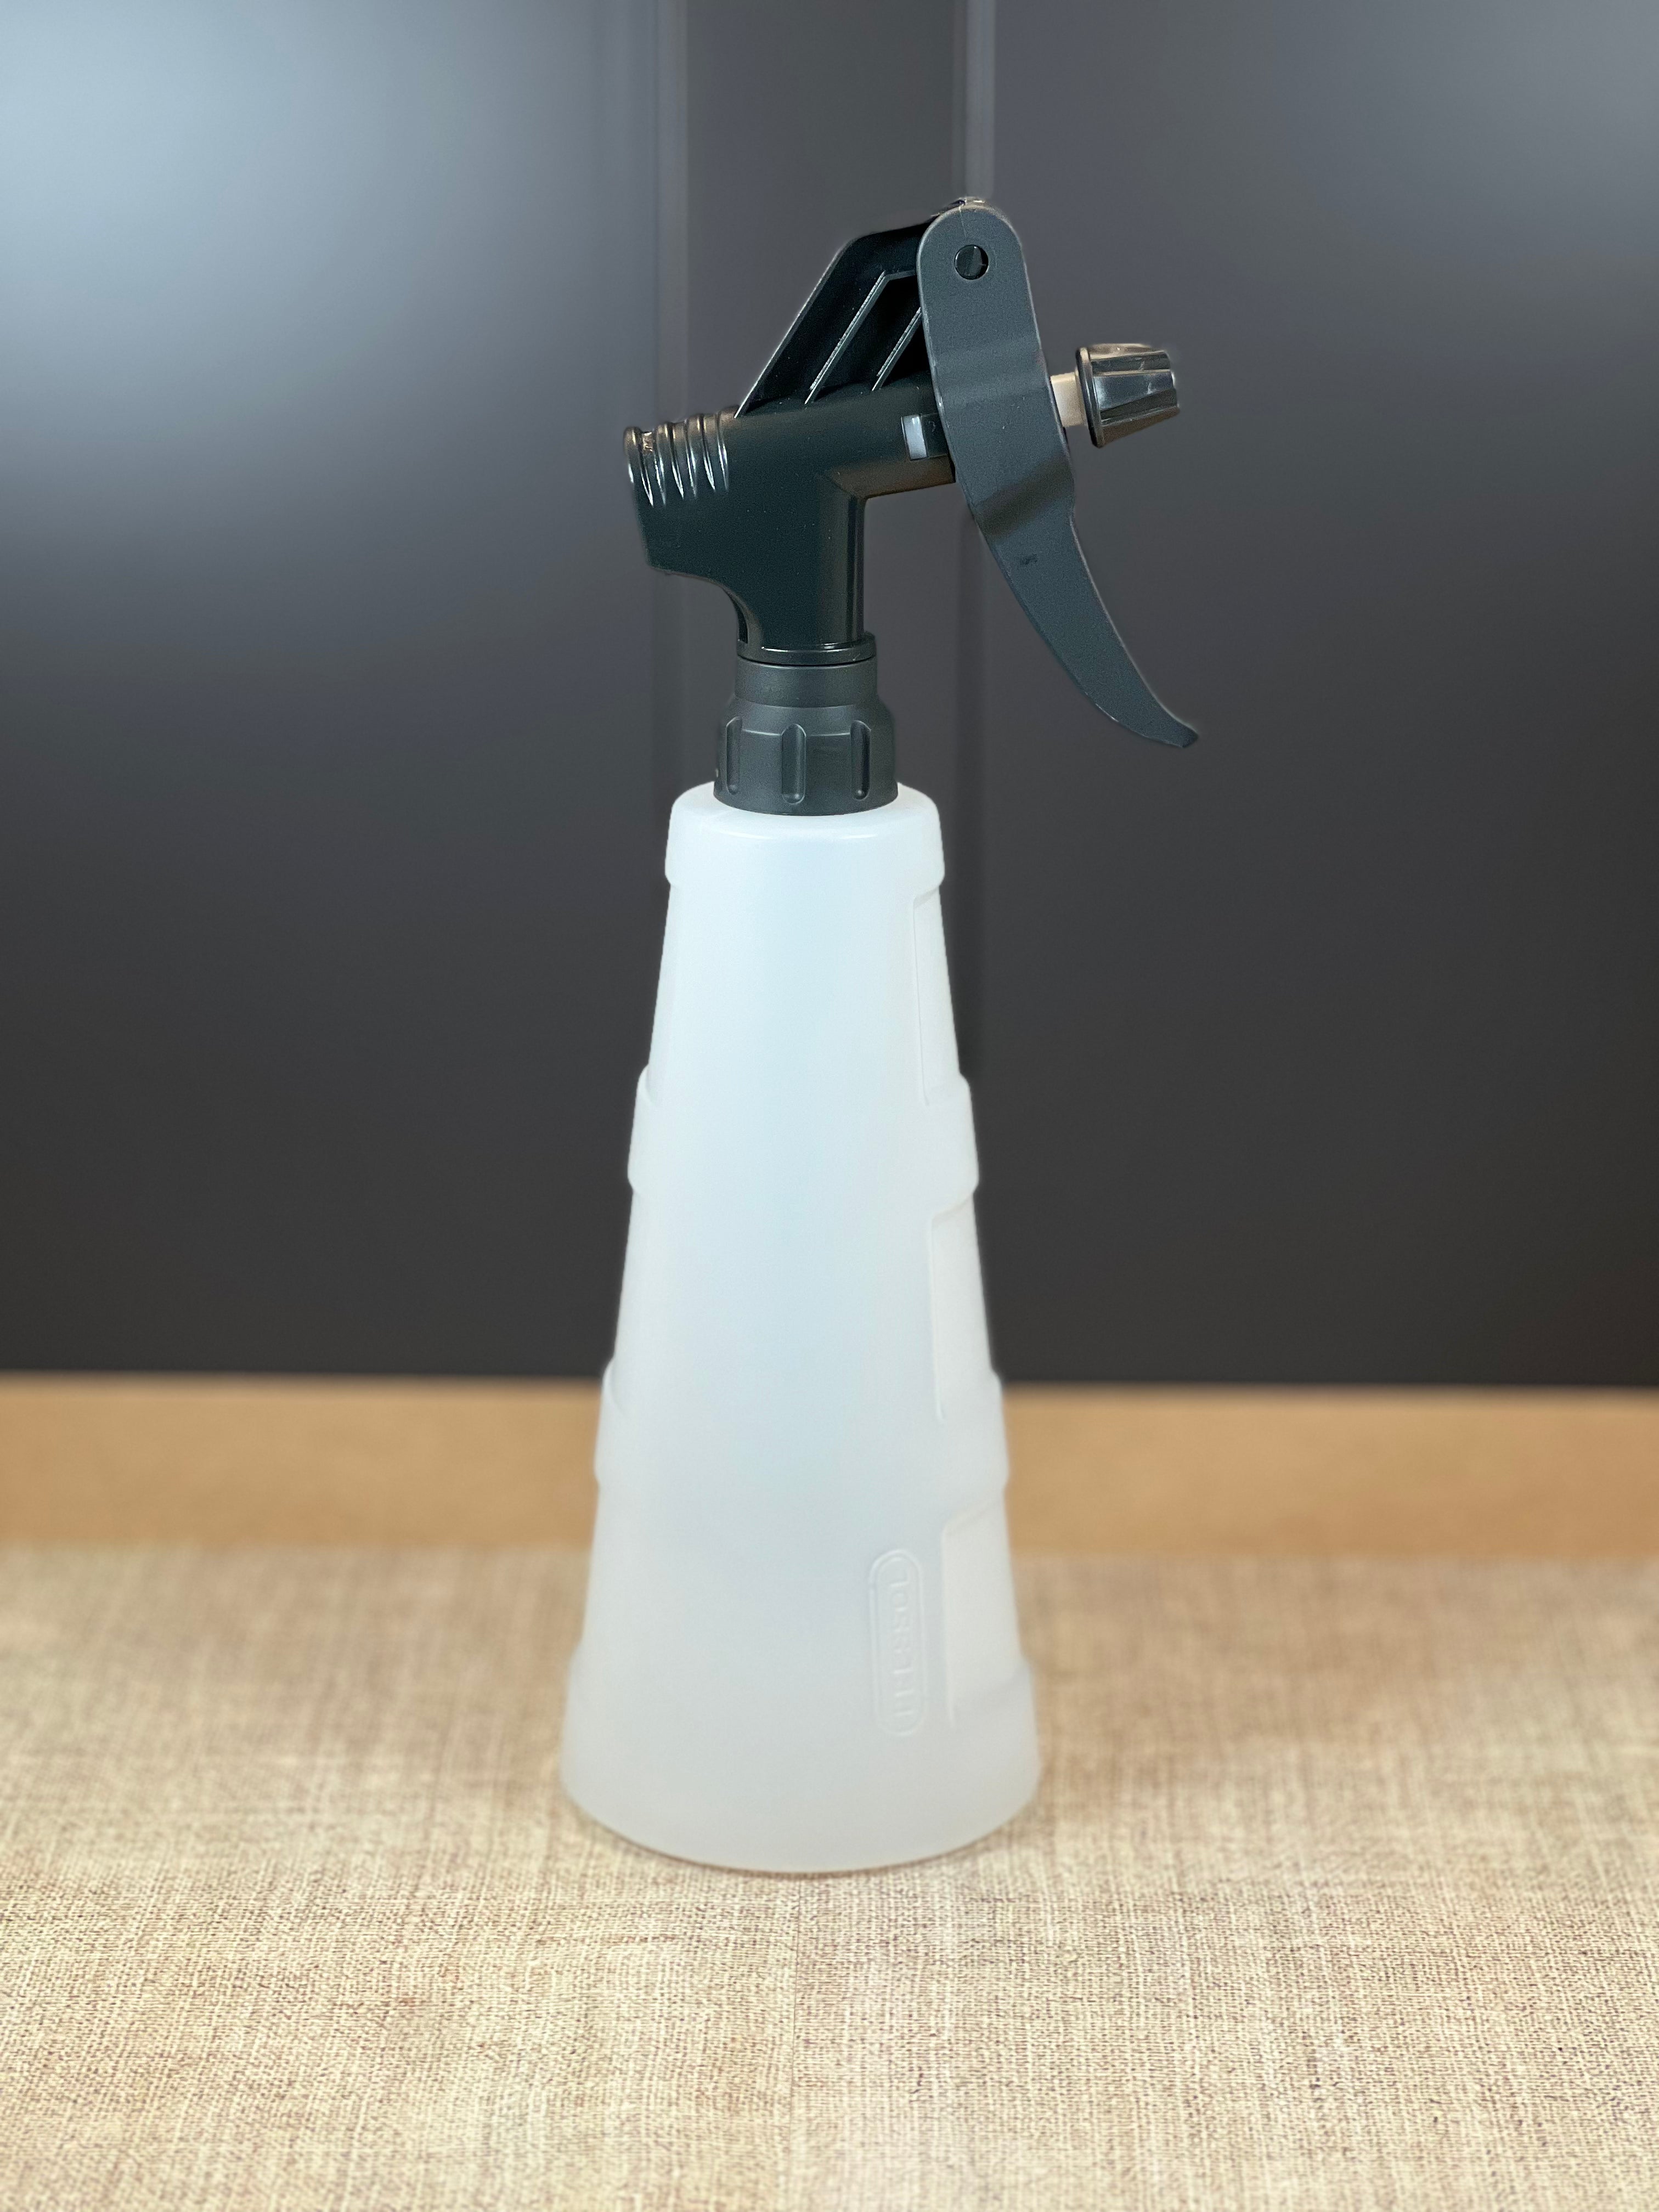 Invisible Spray Bottle Wall Holder - IK Trigger Sprayer